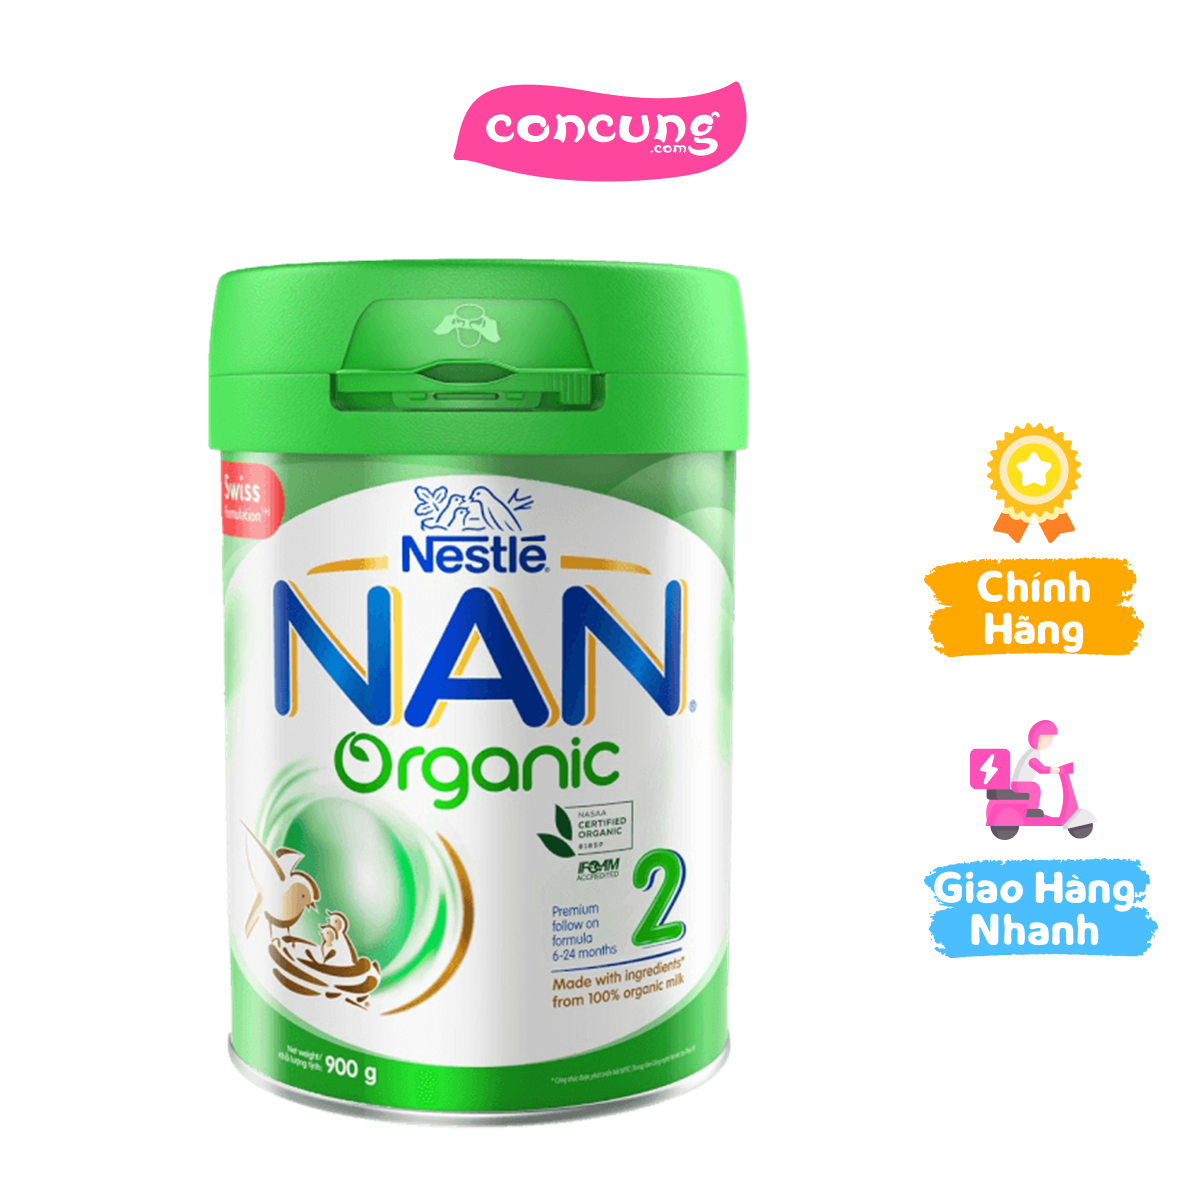 Nestle NAN Organic 2, 6 - 24 tháng, 900g